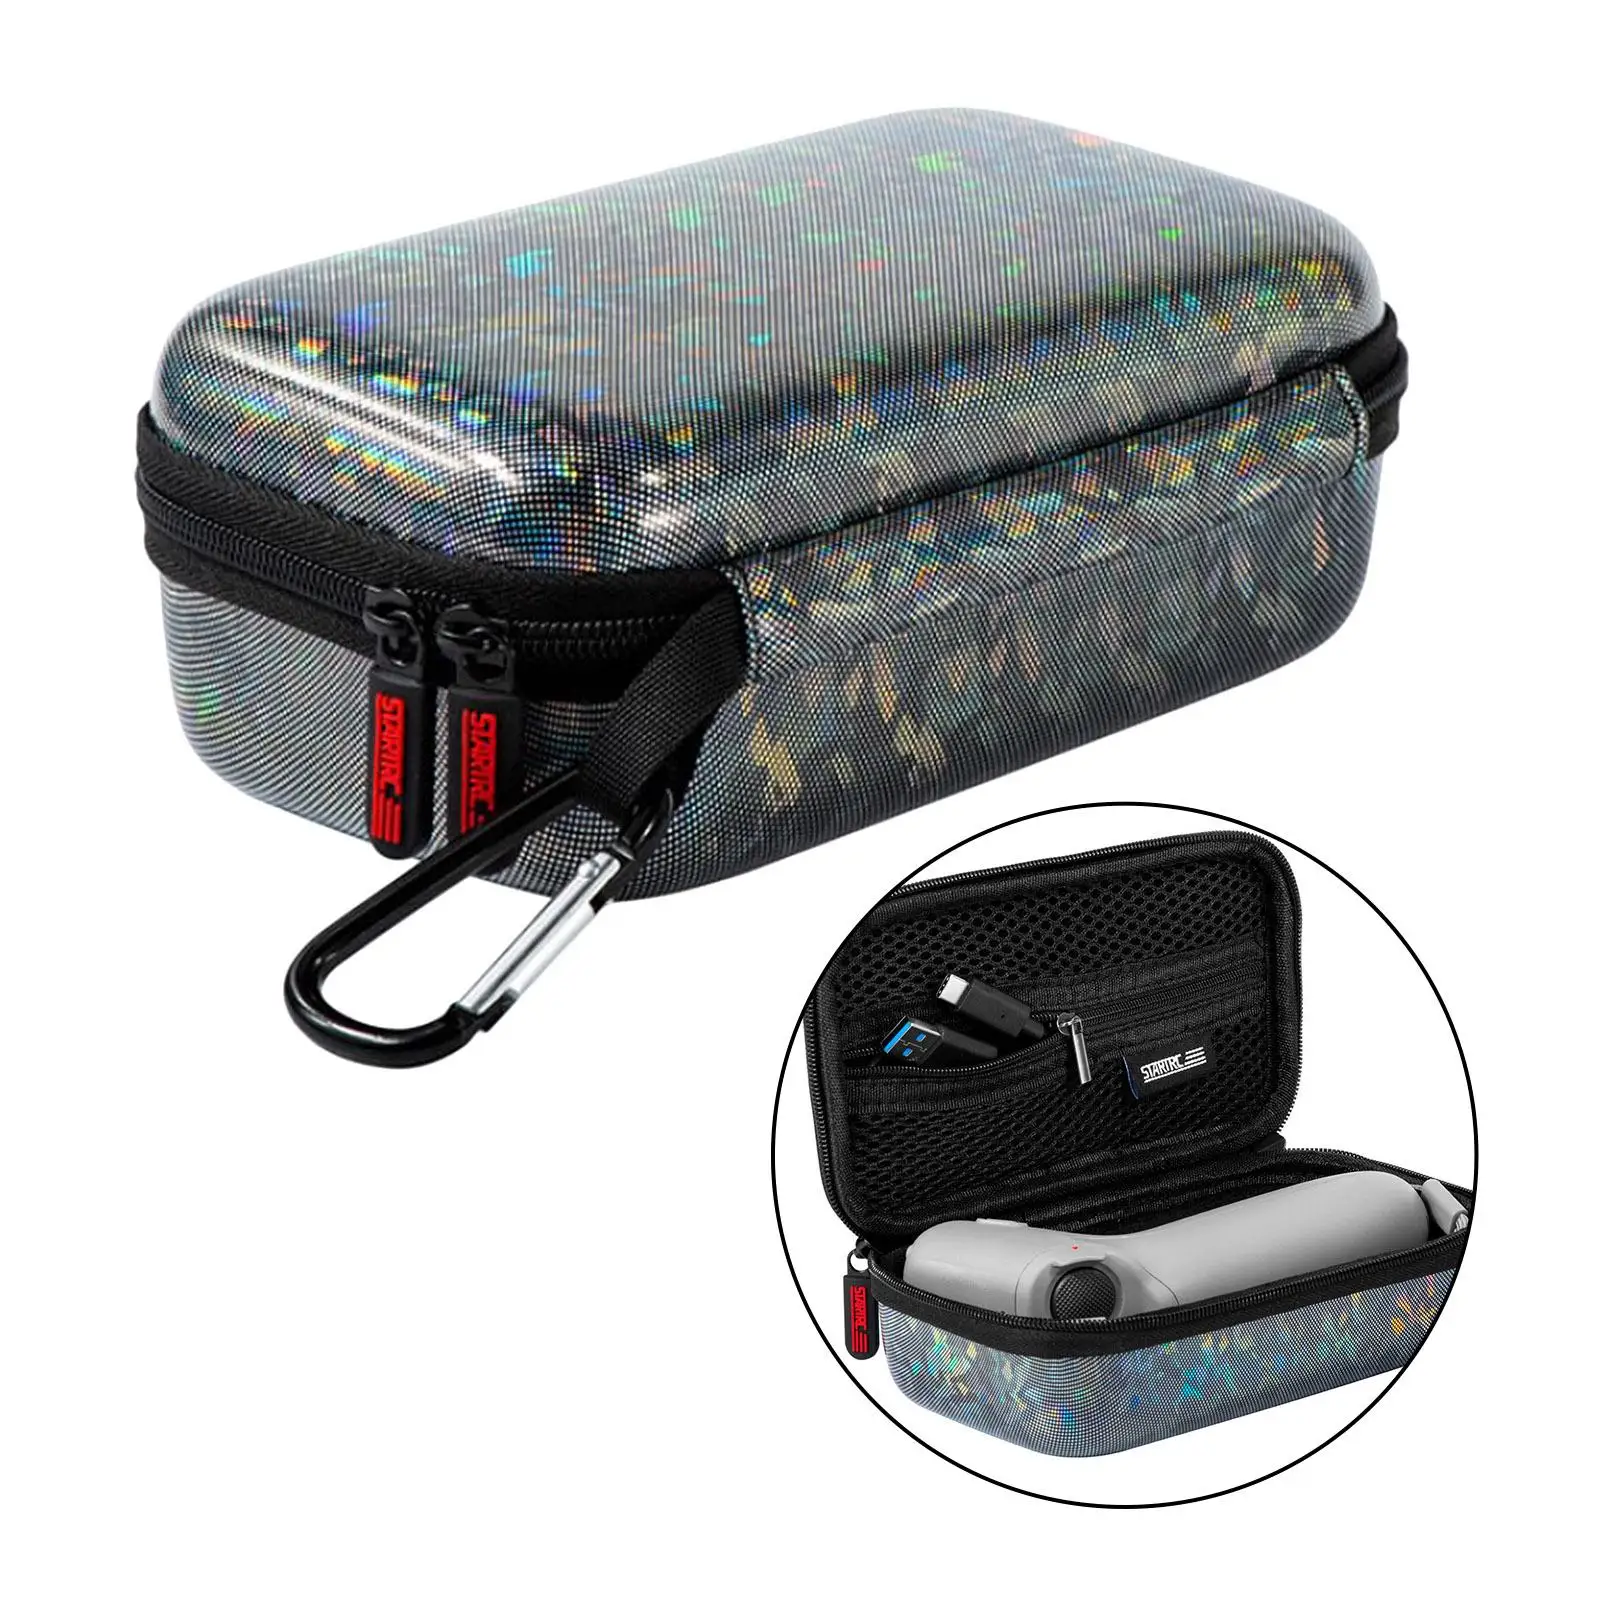 Lightweight  Travel Carrying Case Waterproof Storage Bag for DJIFPV